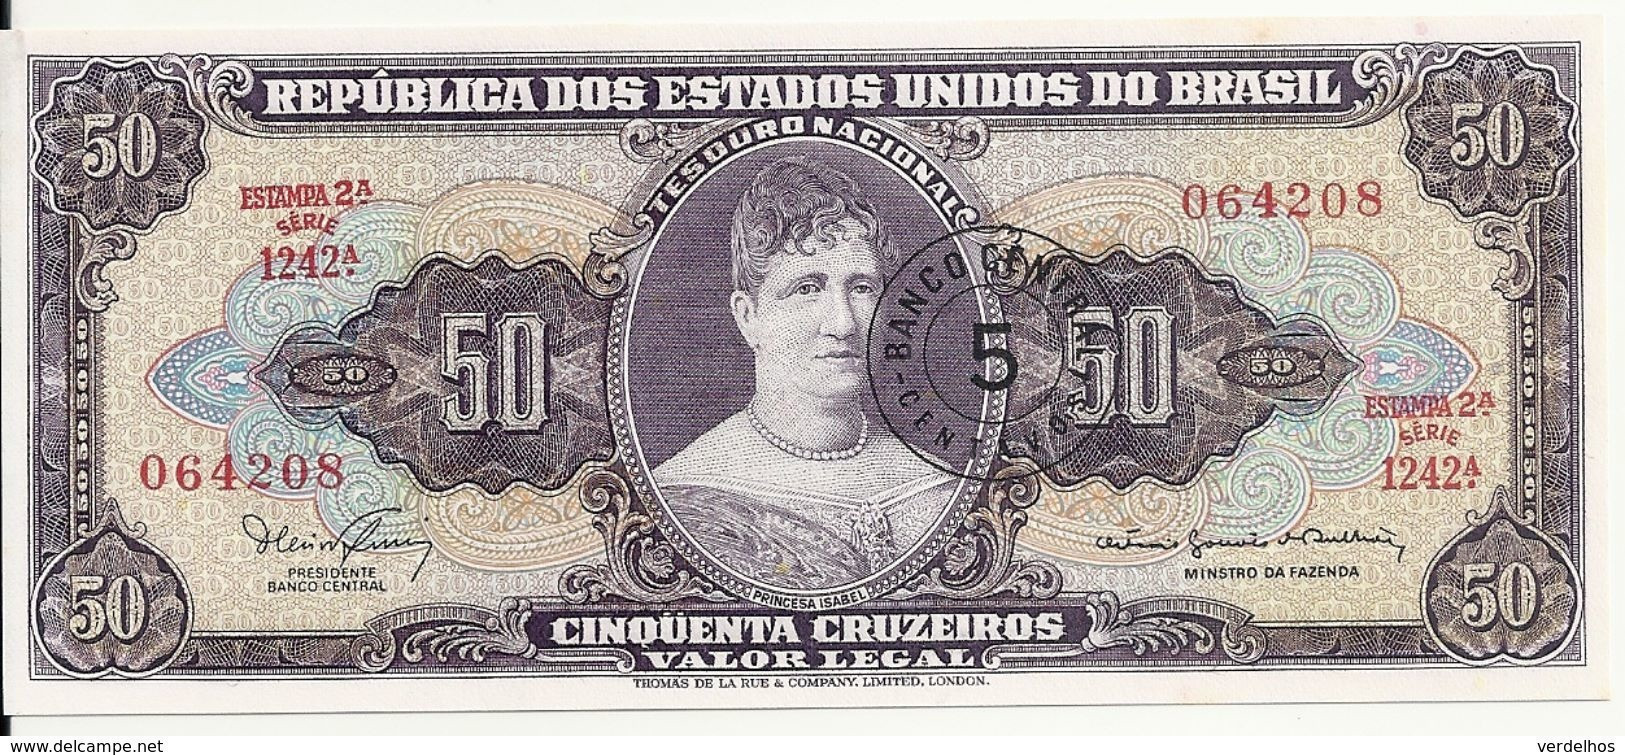 BRESIL 50 CRUZEIROS ND1966-67 UNC P 184 - Brazil